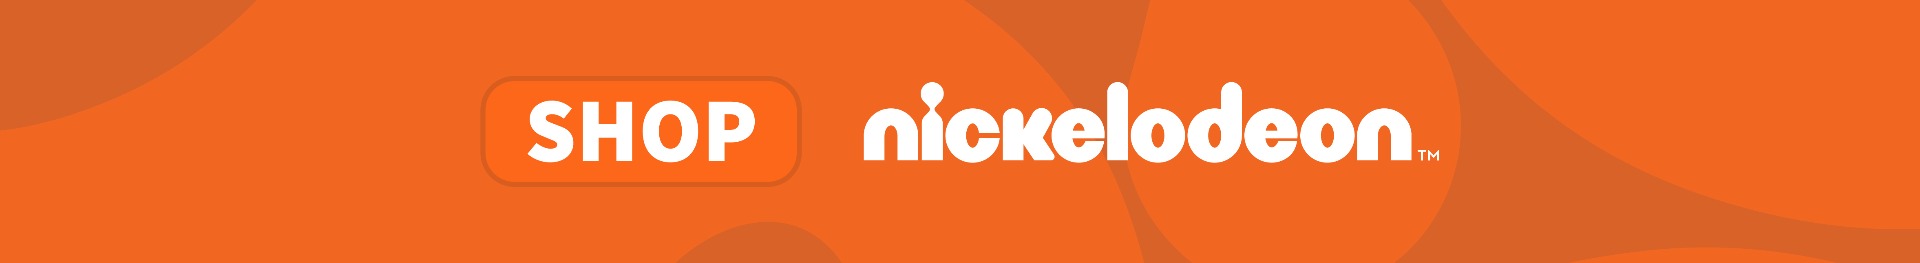 Shop Nickelodeon